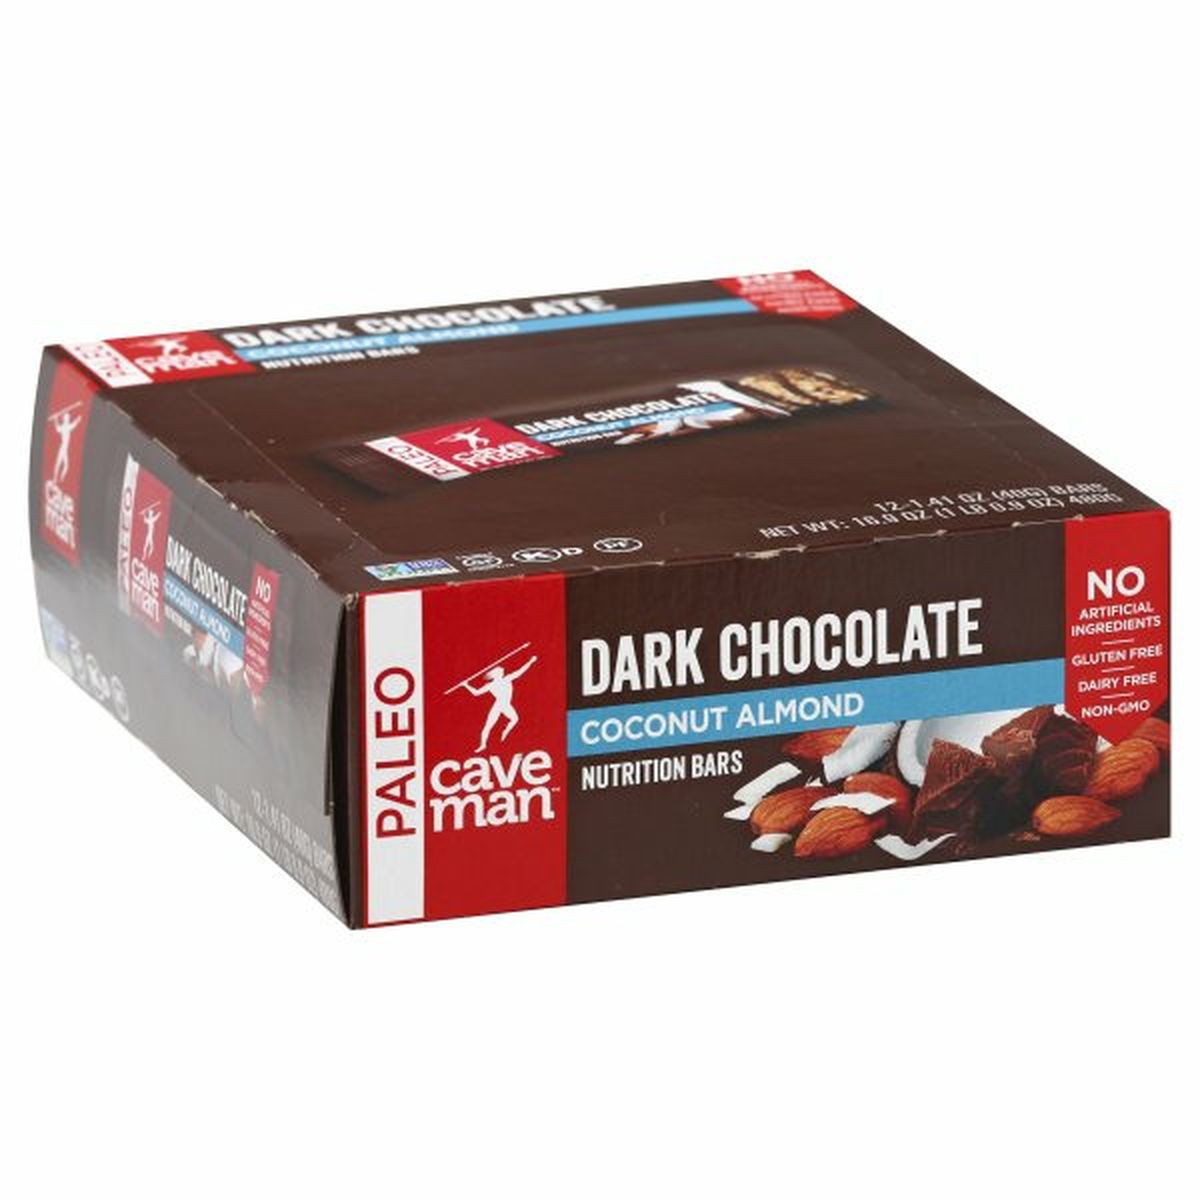 Calories in Caveman Nutrition Bars, Dark Chocolate, Coconut Almond